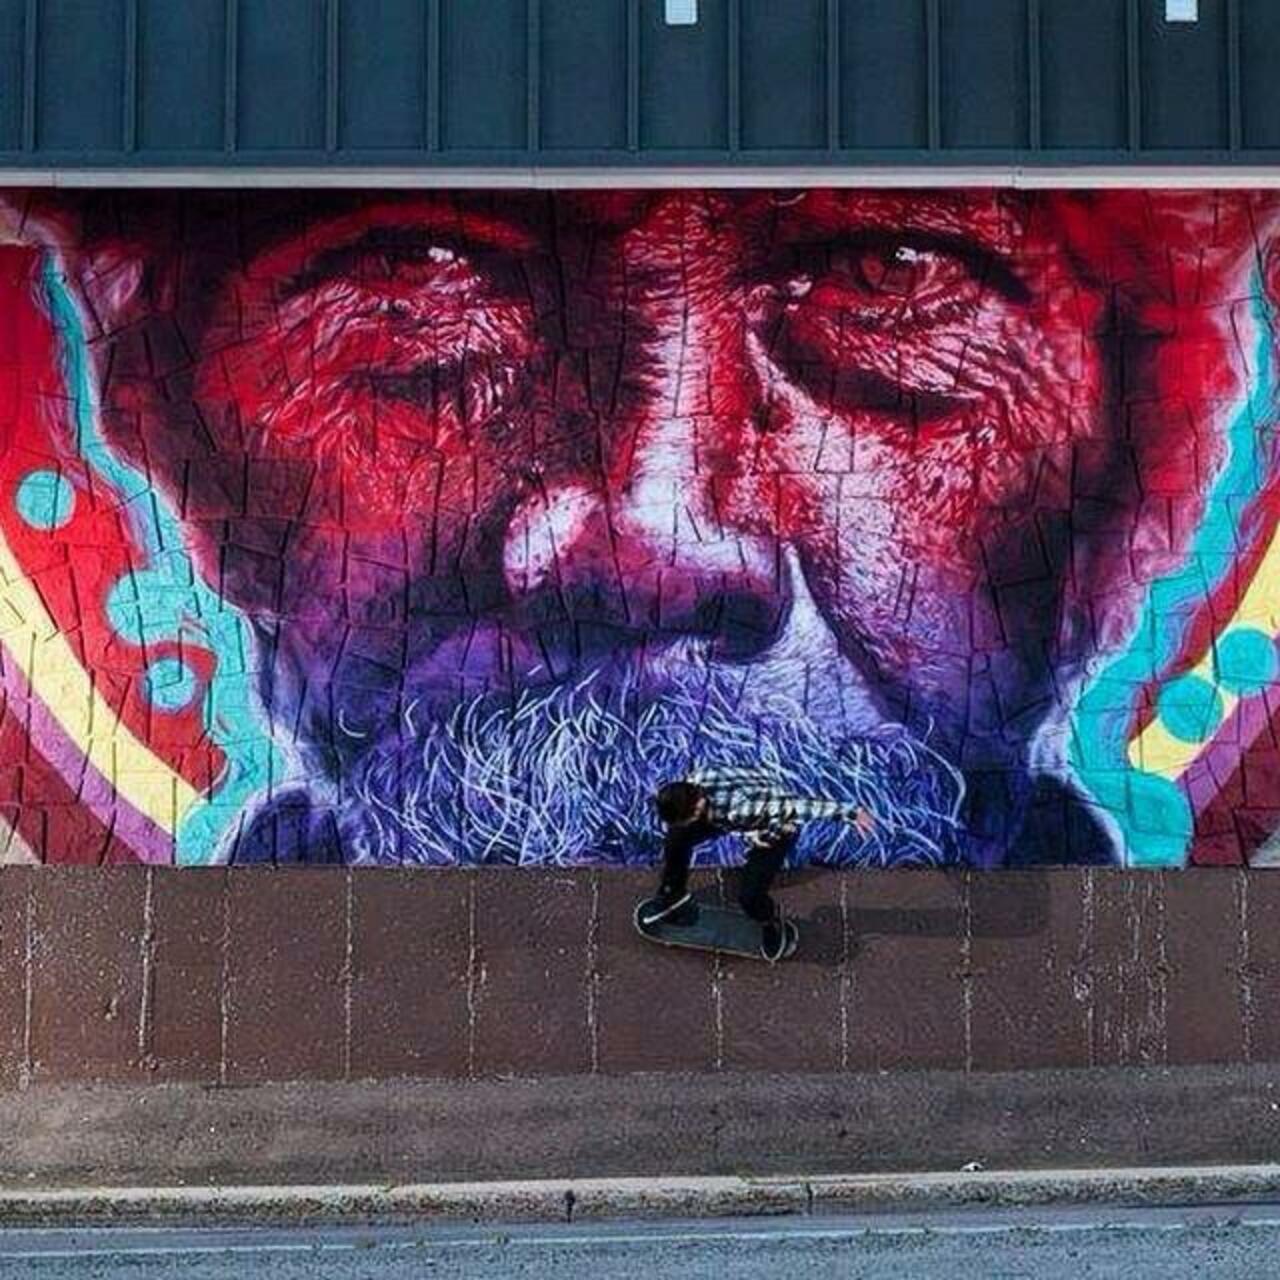 From Montcon, Canada, Kevin Ledo's class Street Art portrait 

#art #mural #graffiti #streetart http://t.co/km6l76blkp